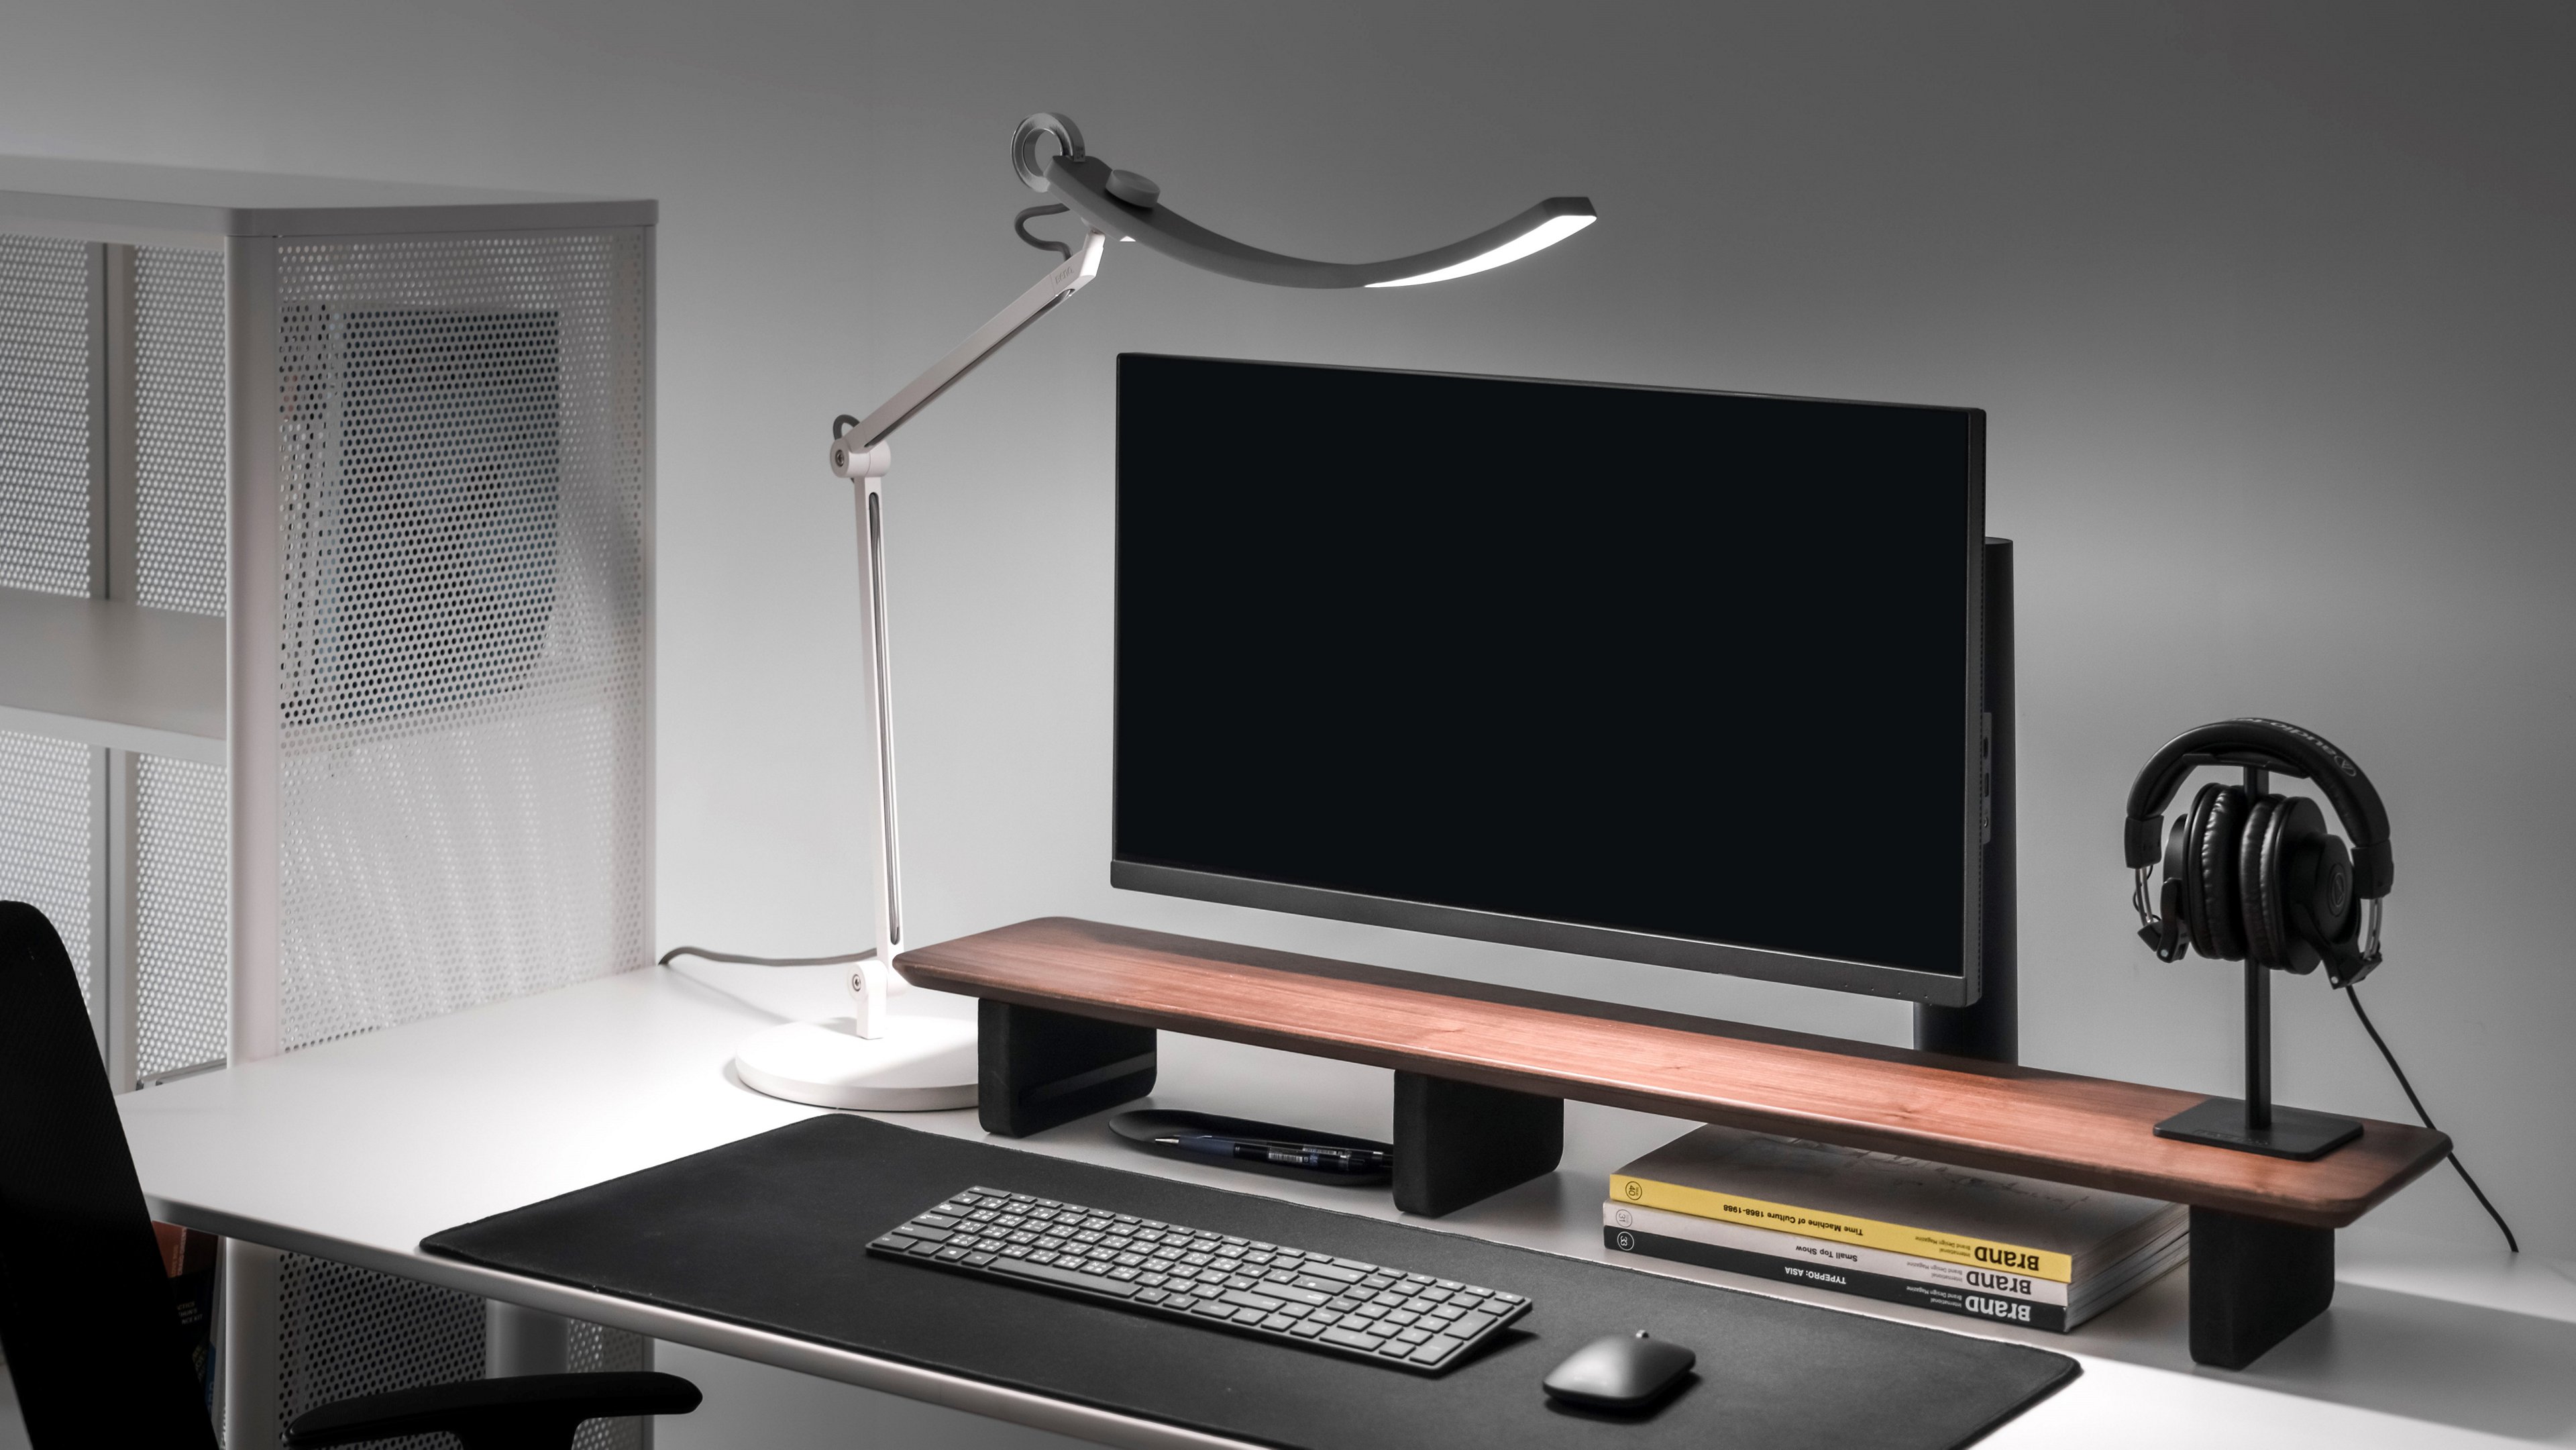 benq e-reading desk lamp proides an ultrawide lighting coverage for home office setups